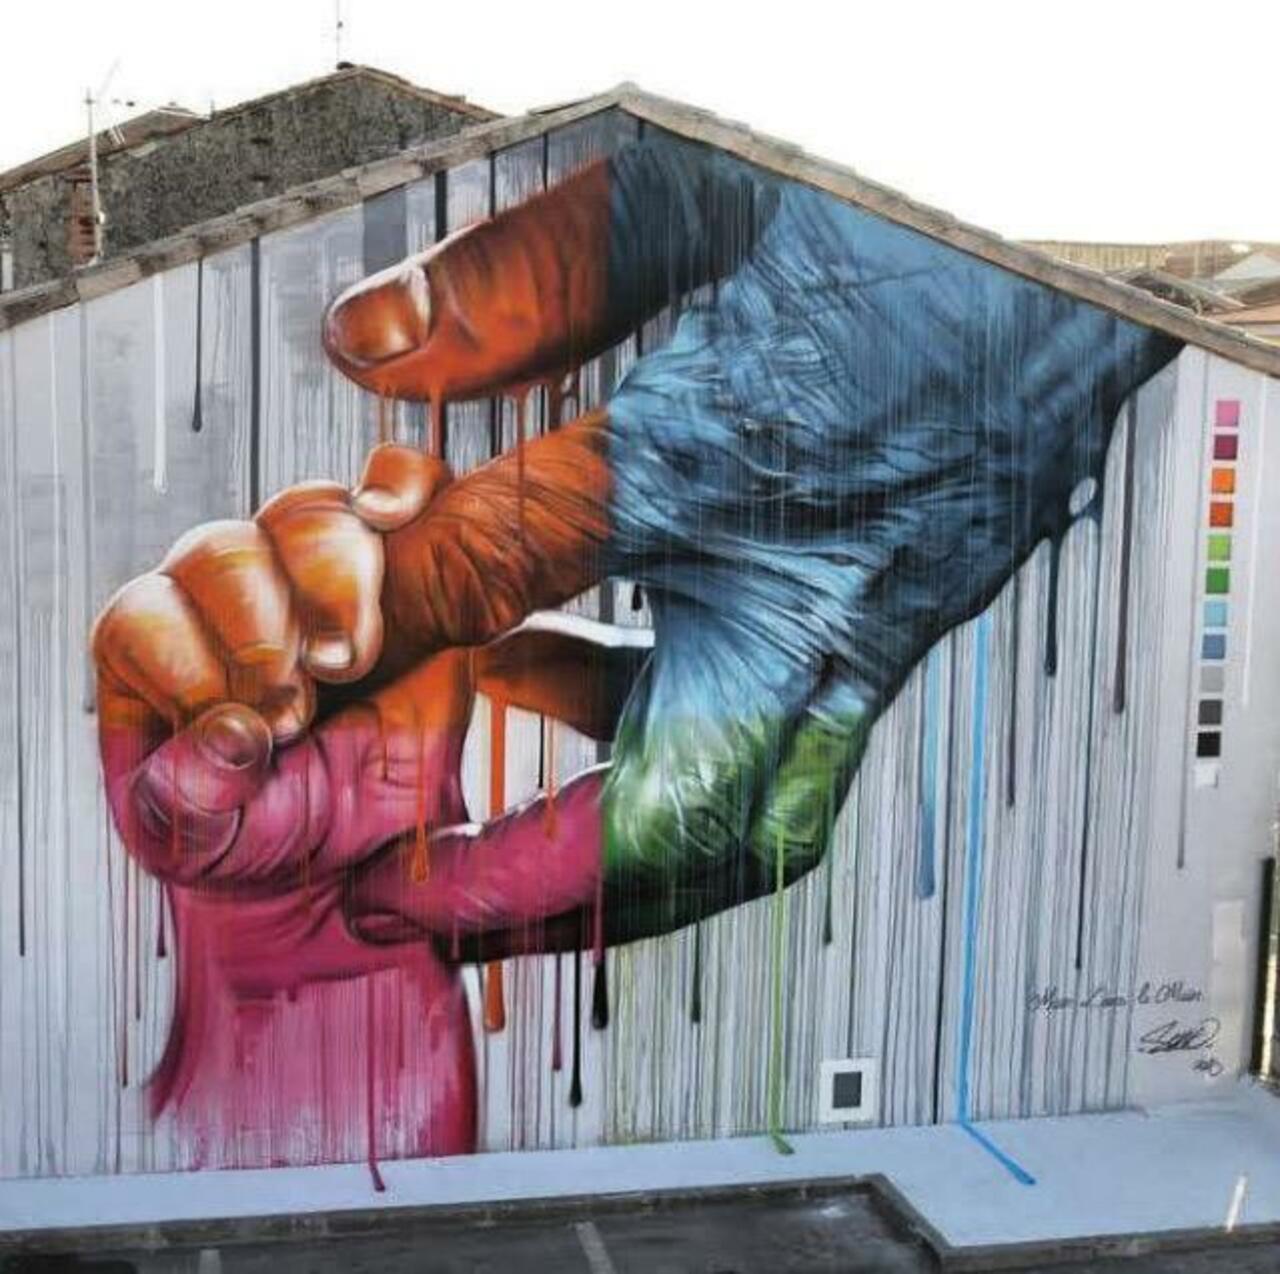 RT @GoogleStreetArt: Seno Street Art 

#art #graffiti #mural #streetart http://t.co/PVoDZaYA88